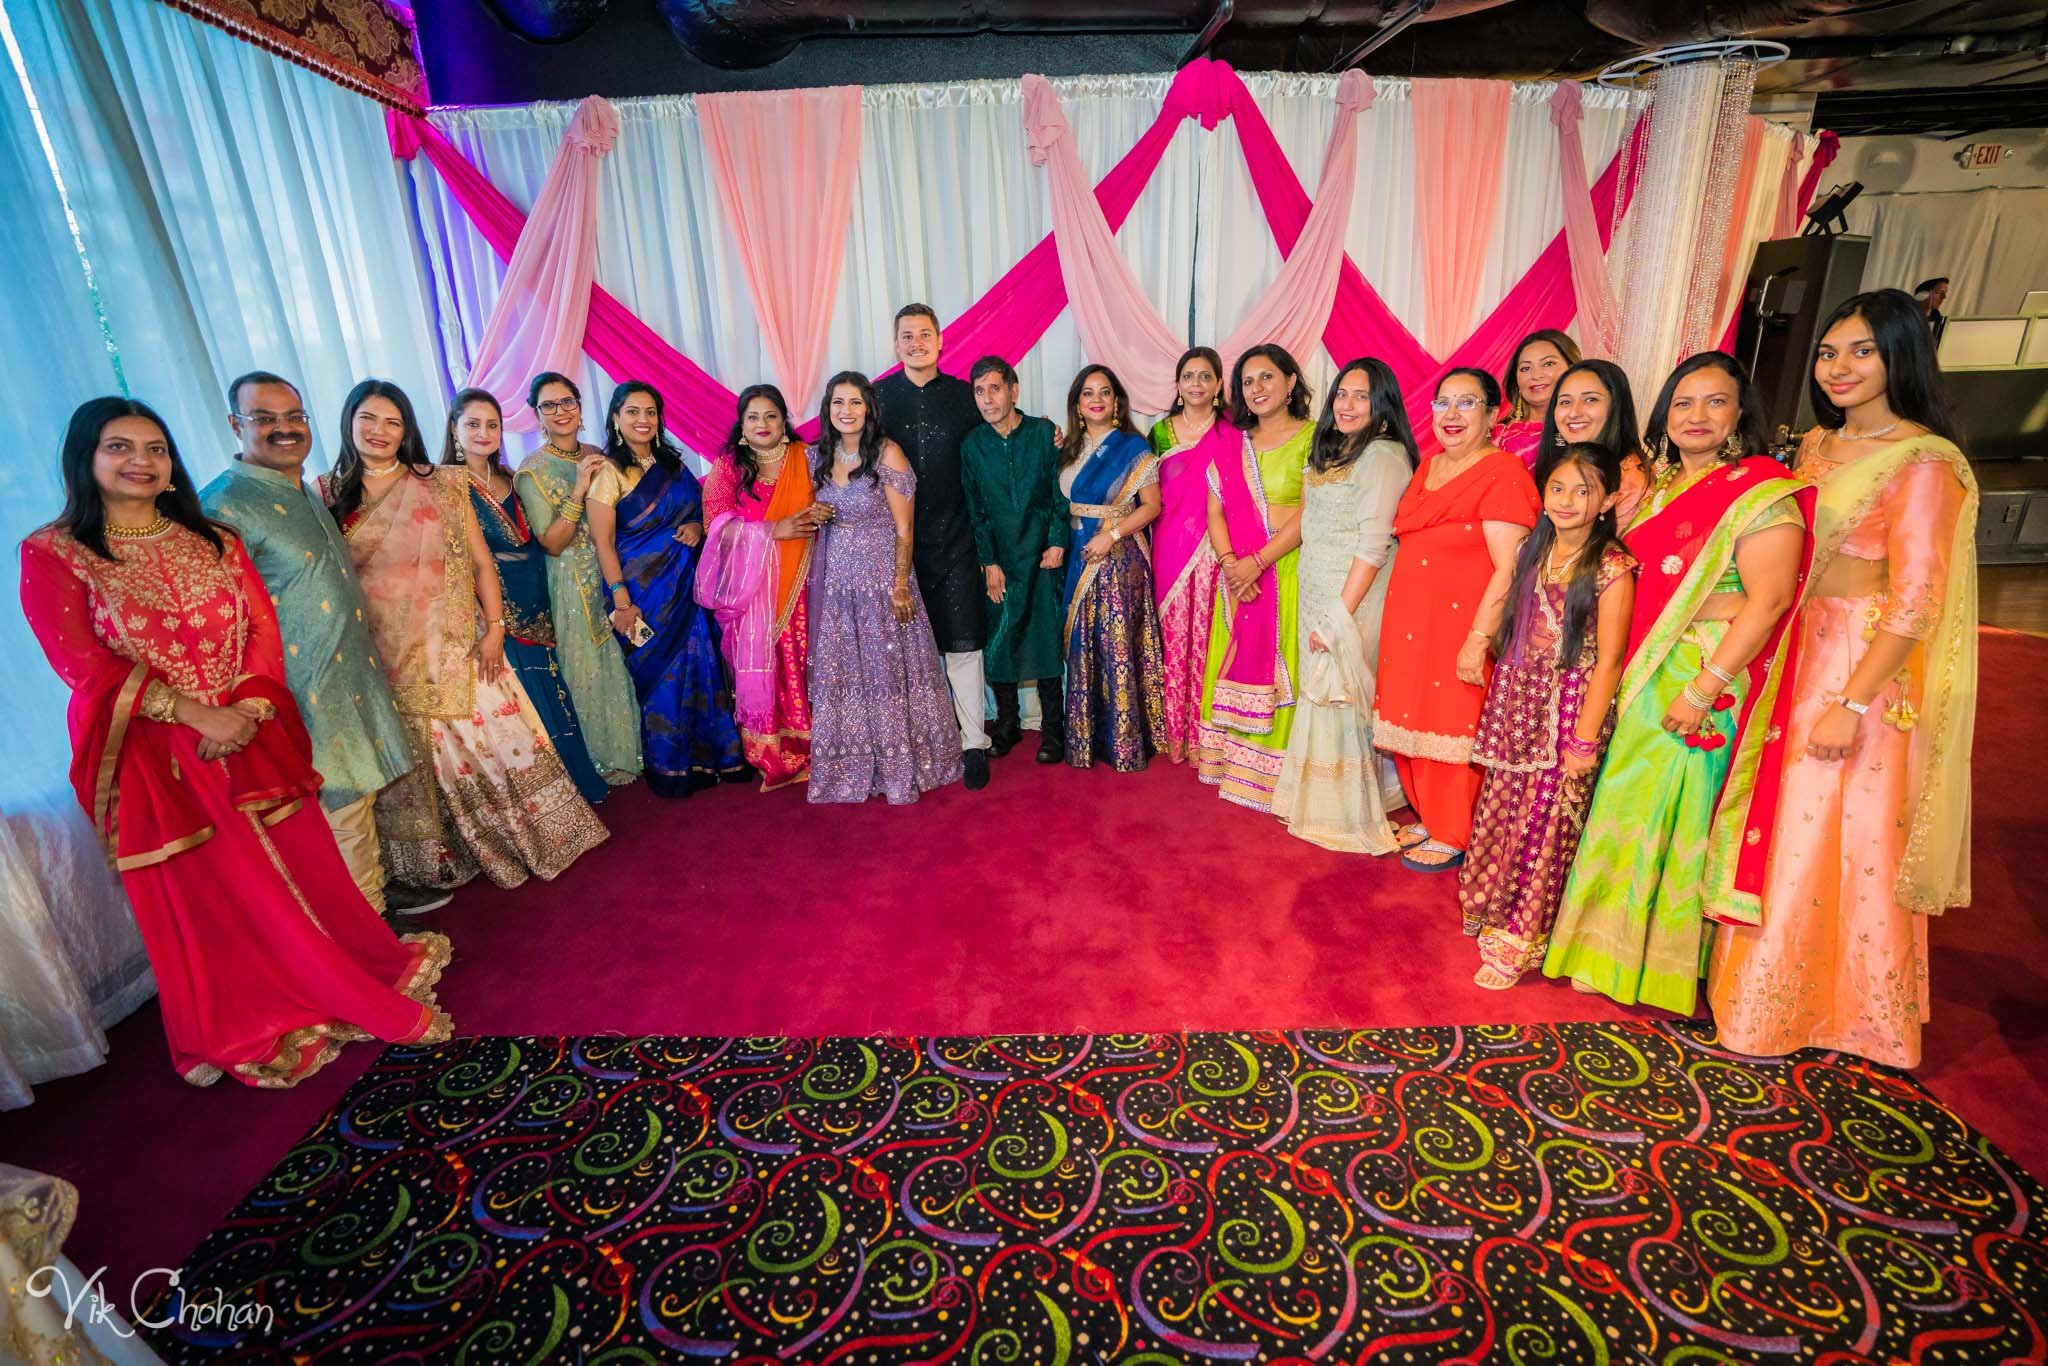 2022-06-07-Annie-&-Steven-Las-Vegas-Indian-Wedding-Sangeet-Night-Celebration-Photography-Vik-Chohan-Photography-Photo-Booth-Social-Media-VCP-026.jpg